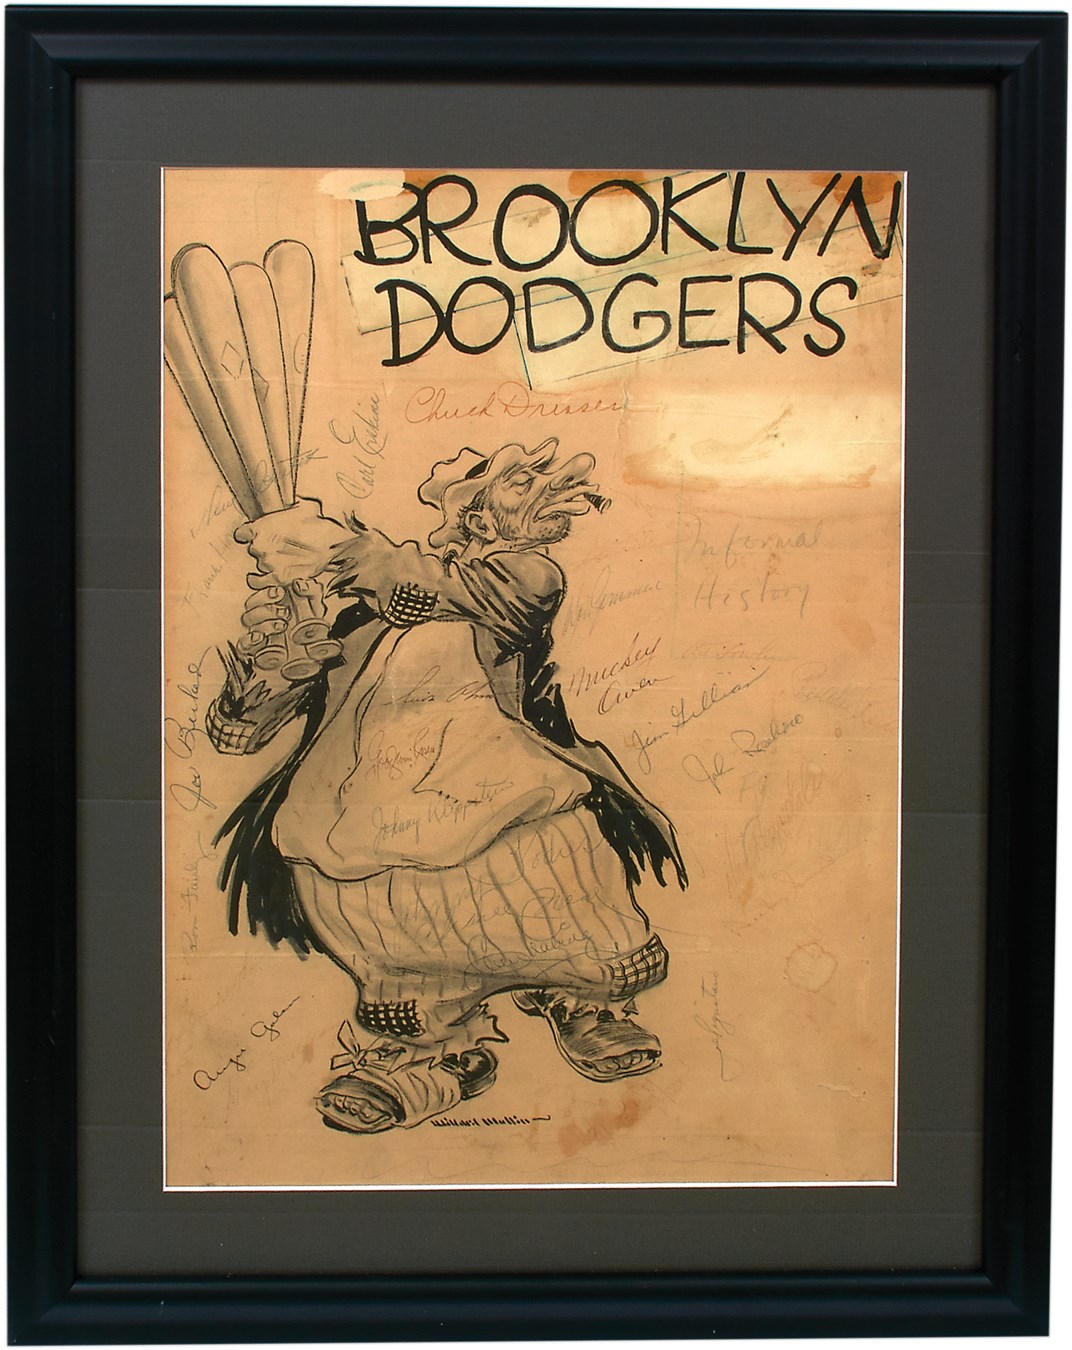 Brooklyn Dodgers "Bum" Custom Artwork by Willard Mullin - Team Signed with Early Koufax